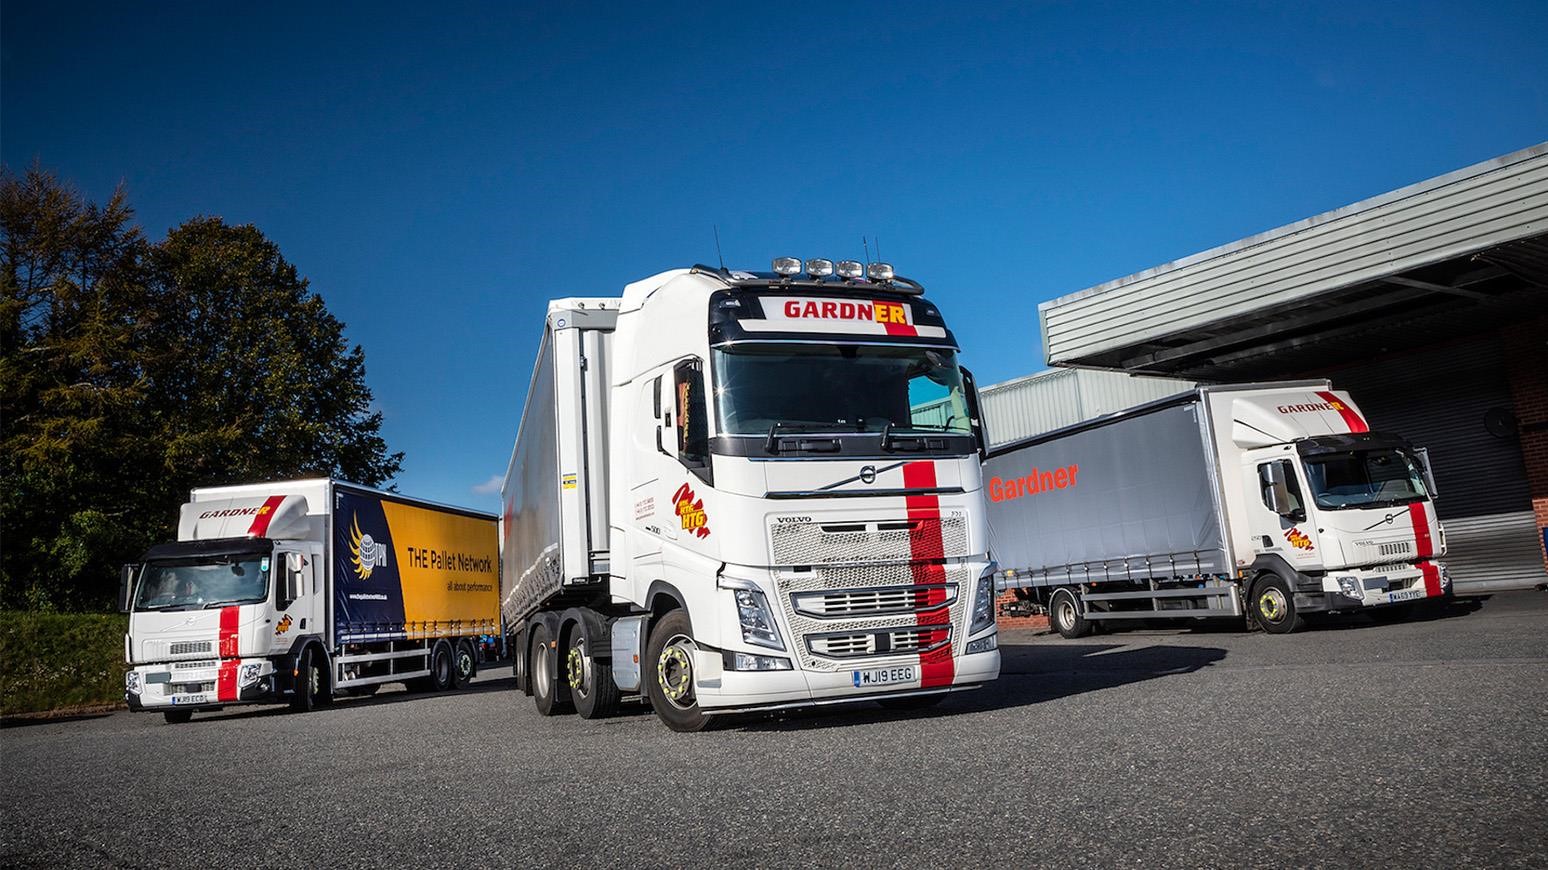 Devon-Based Gardner Distribution Adds Nine Total FE, FH & FL Trucks To Its Fleet